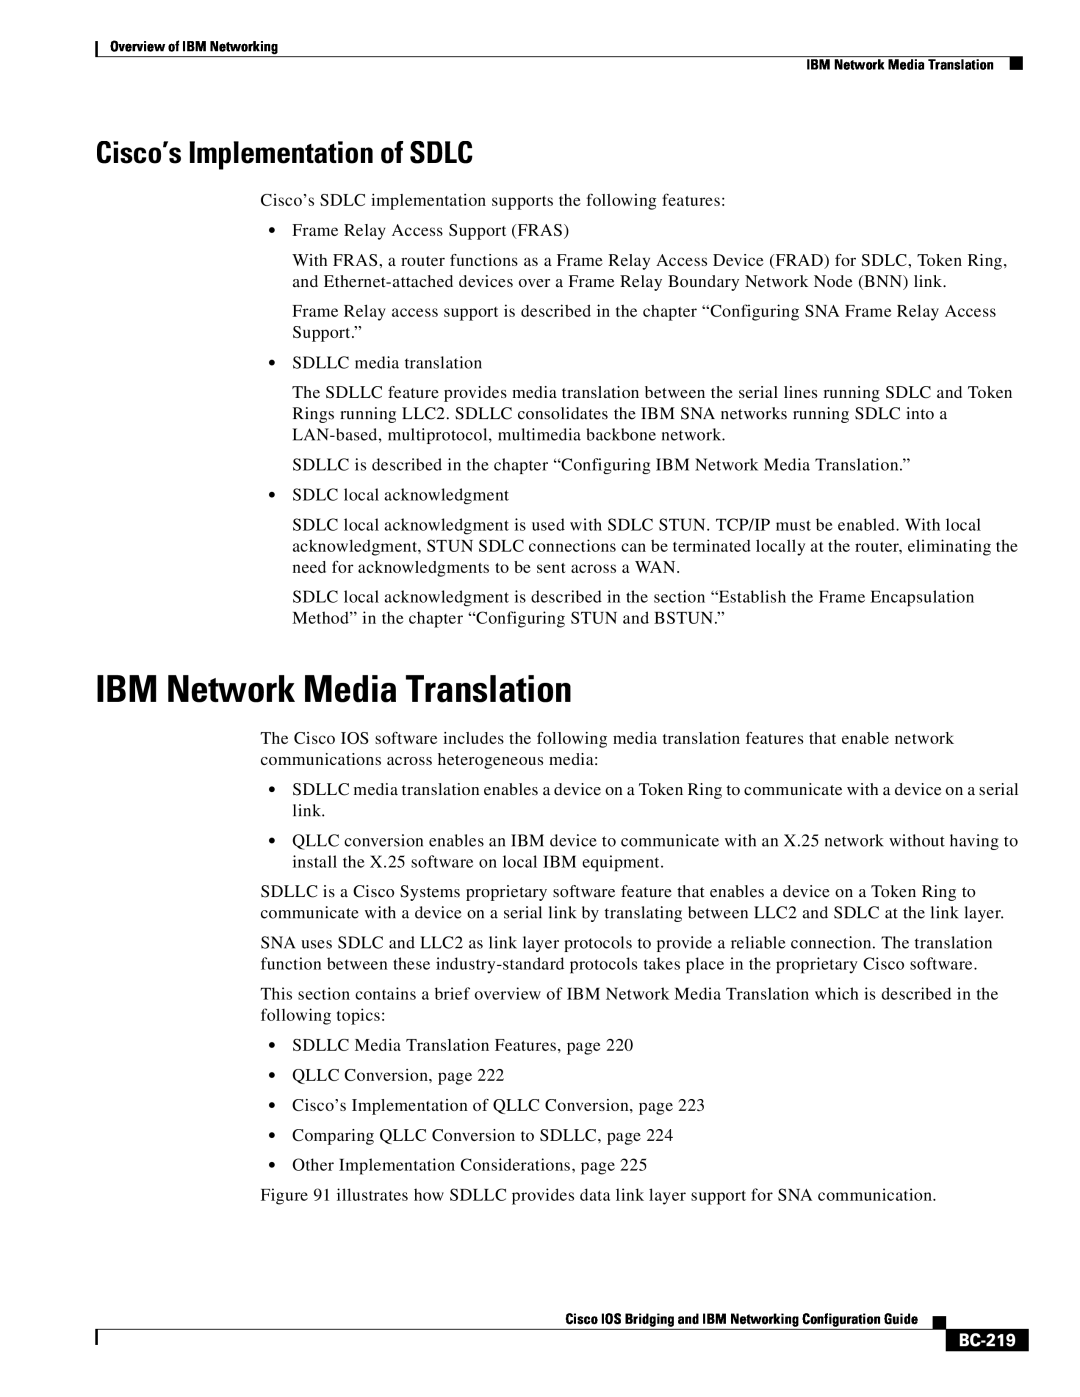 IBM BC-203 manual IBM Network Media Translation, Cisco’s Implementation of SDLC, BC-219 